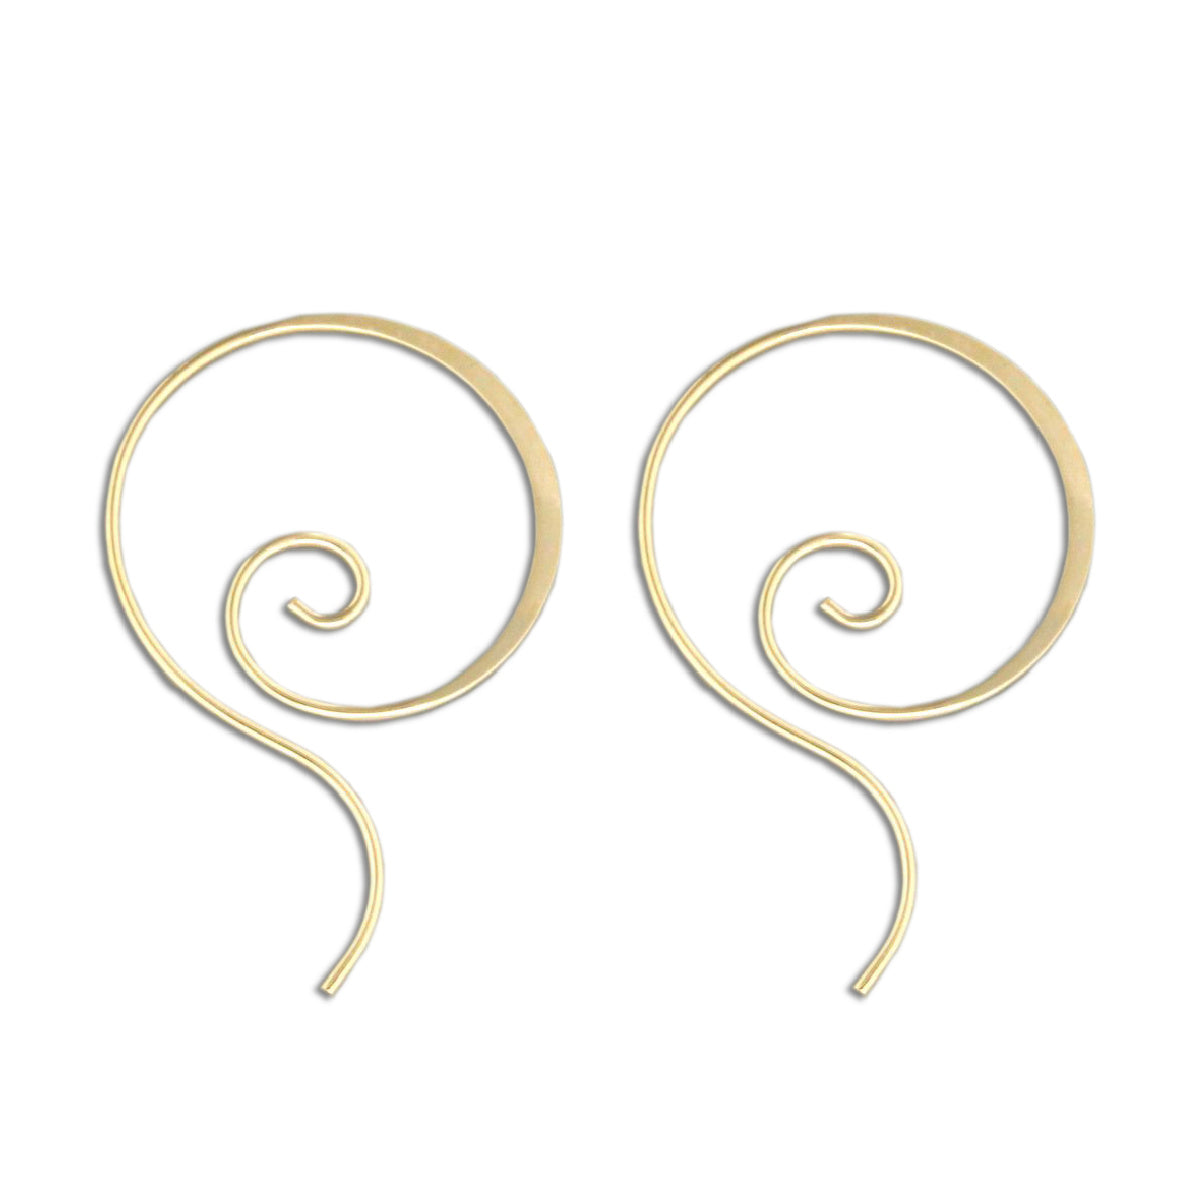 Handcrafted Japanese Jewelry | Spiral Earrings – hk+np studio inc.